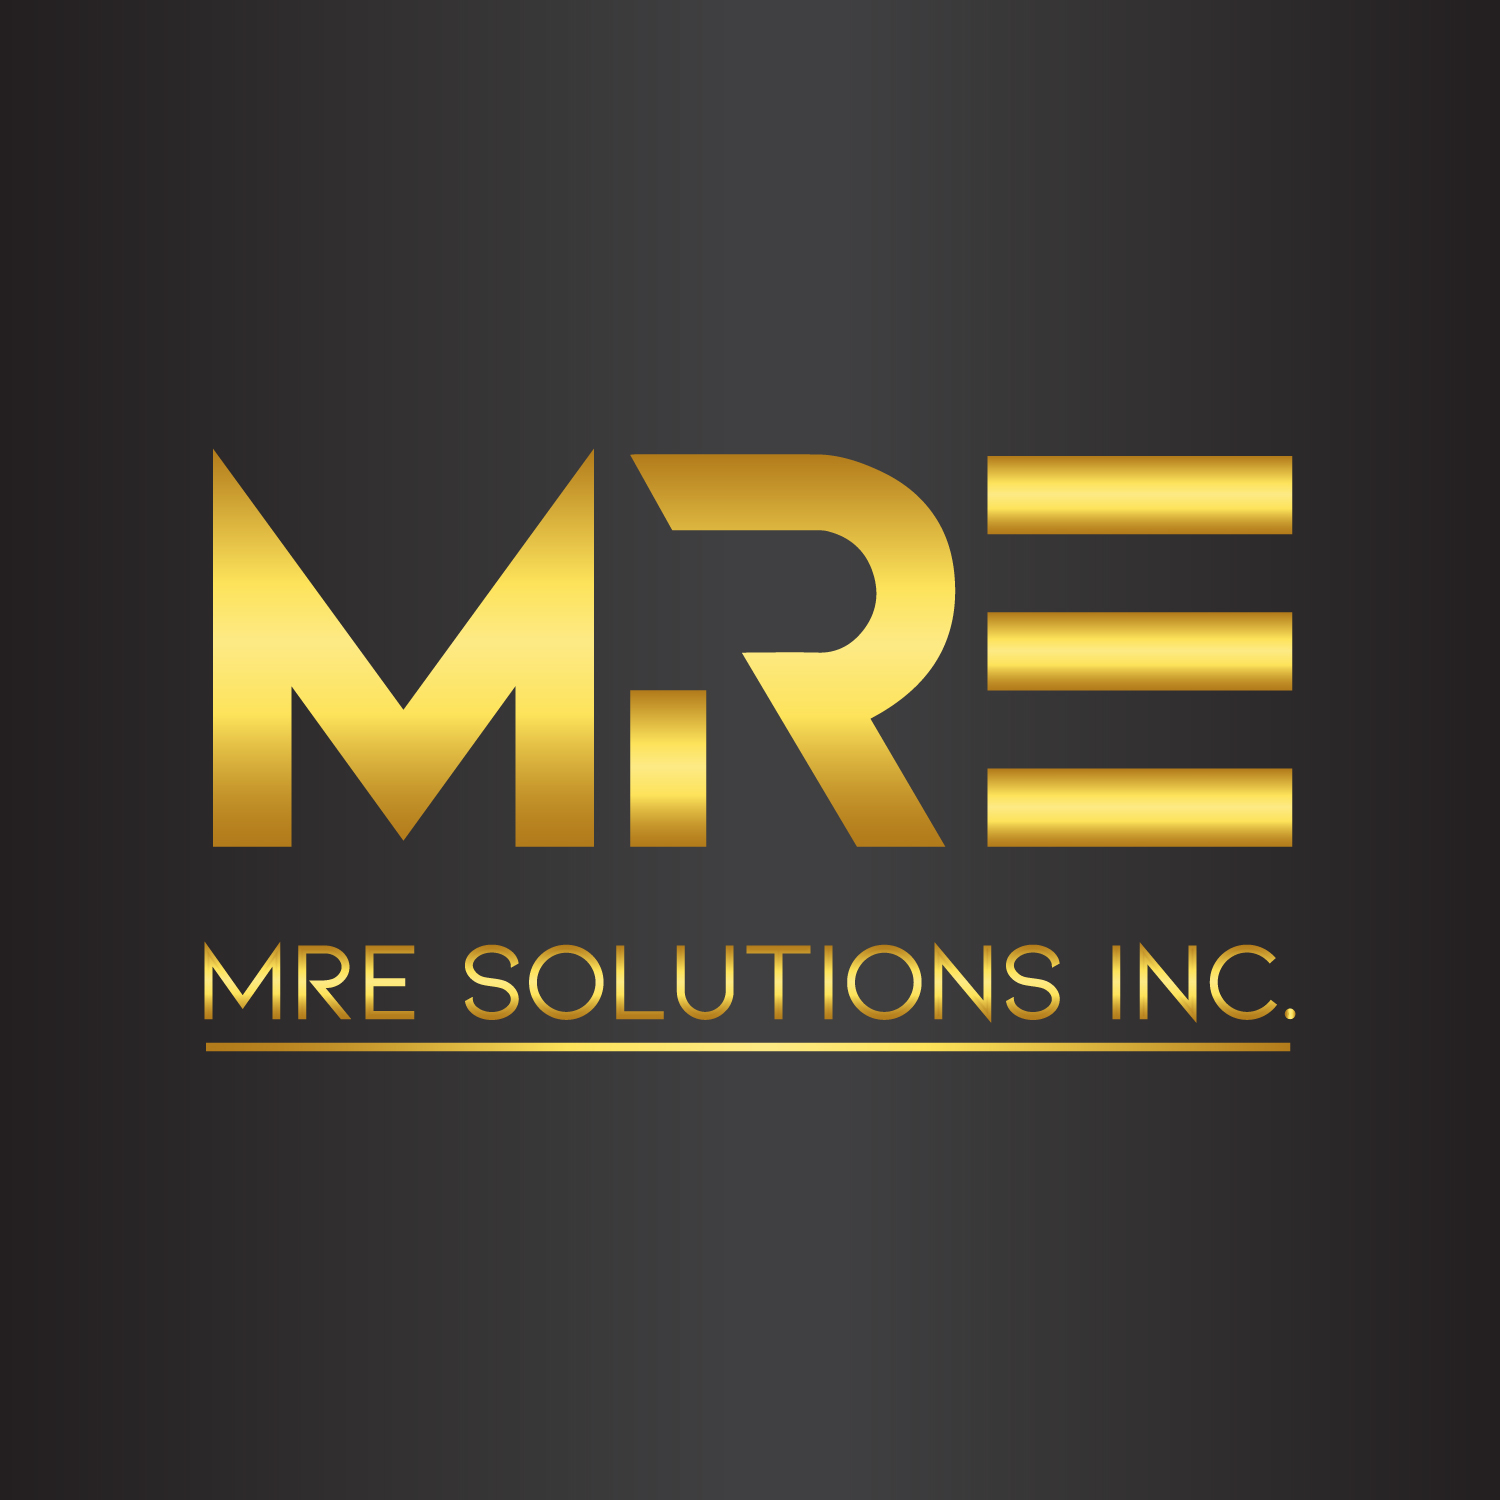 MRE SOLUTIONS INC